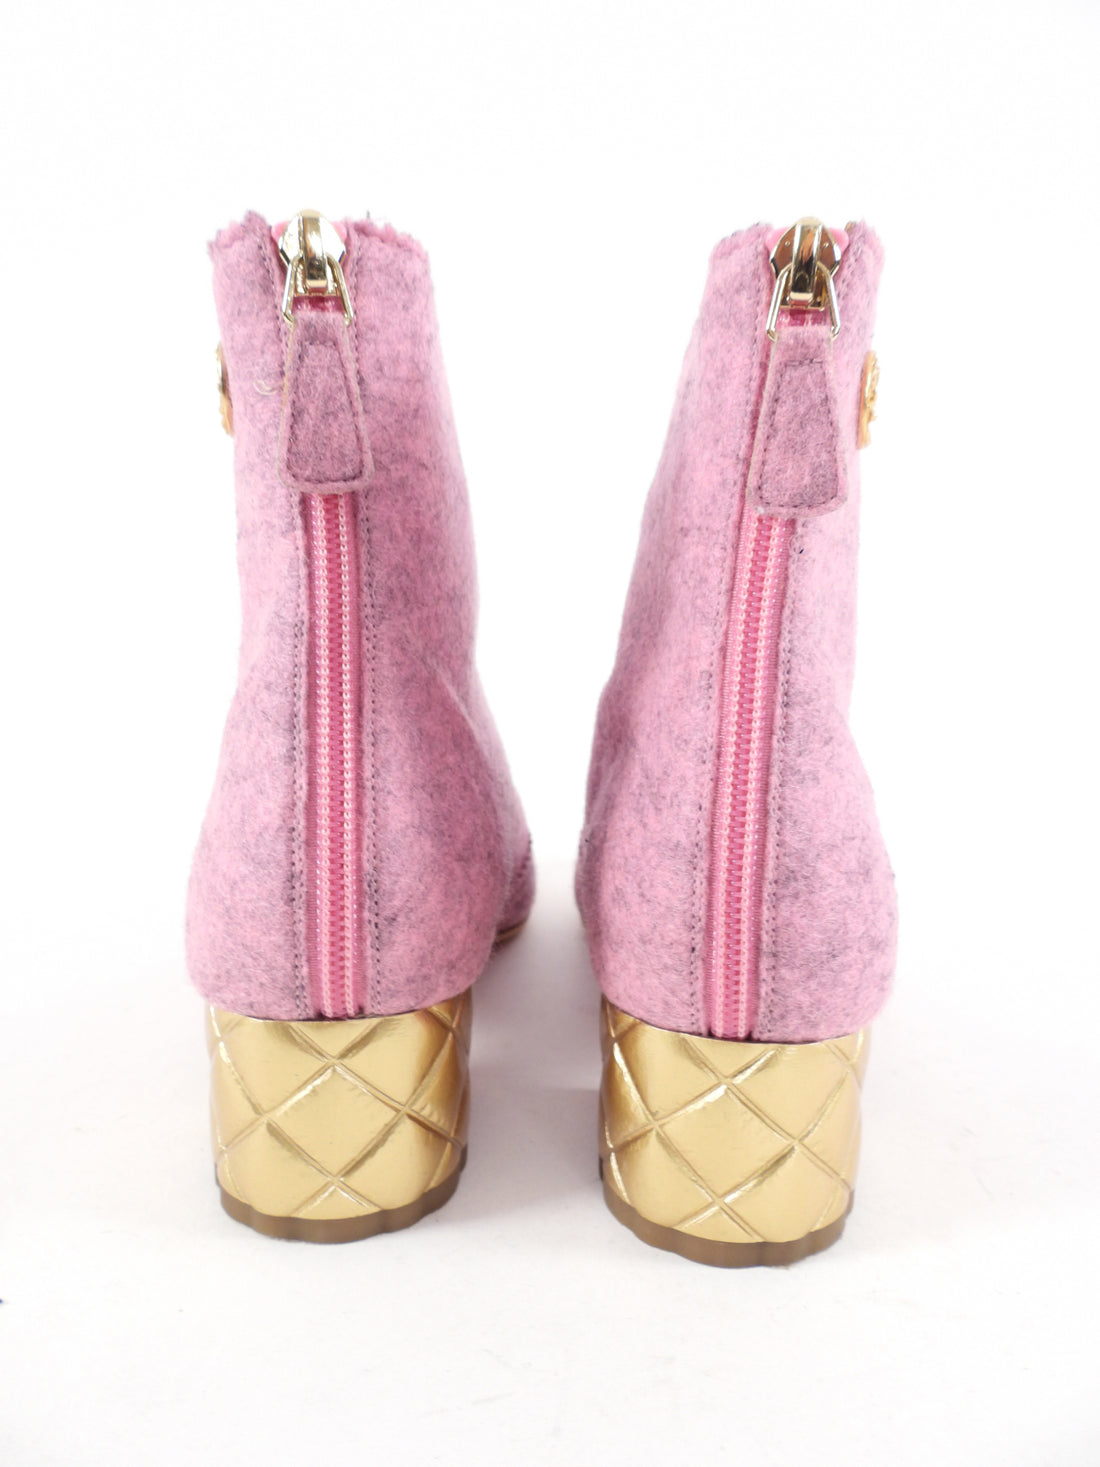 Chanel Paris Salzburg Pink Felt Gold Heel Ankle Boots - USA 9